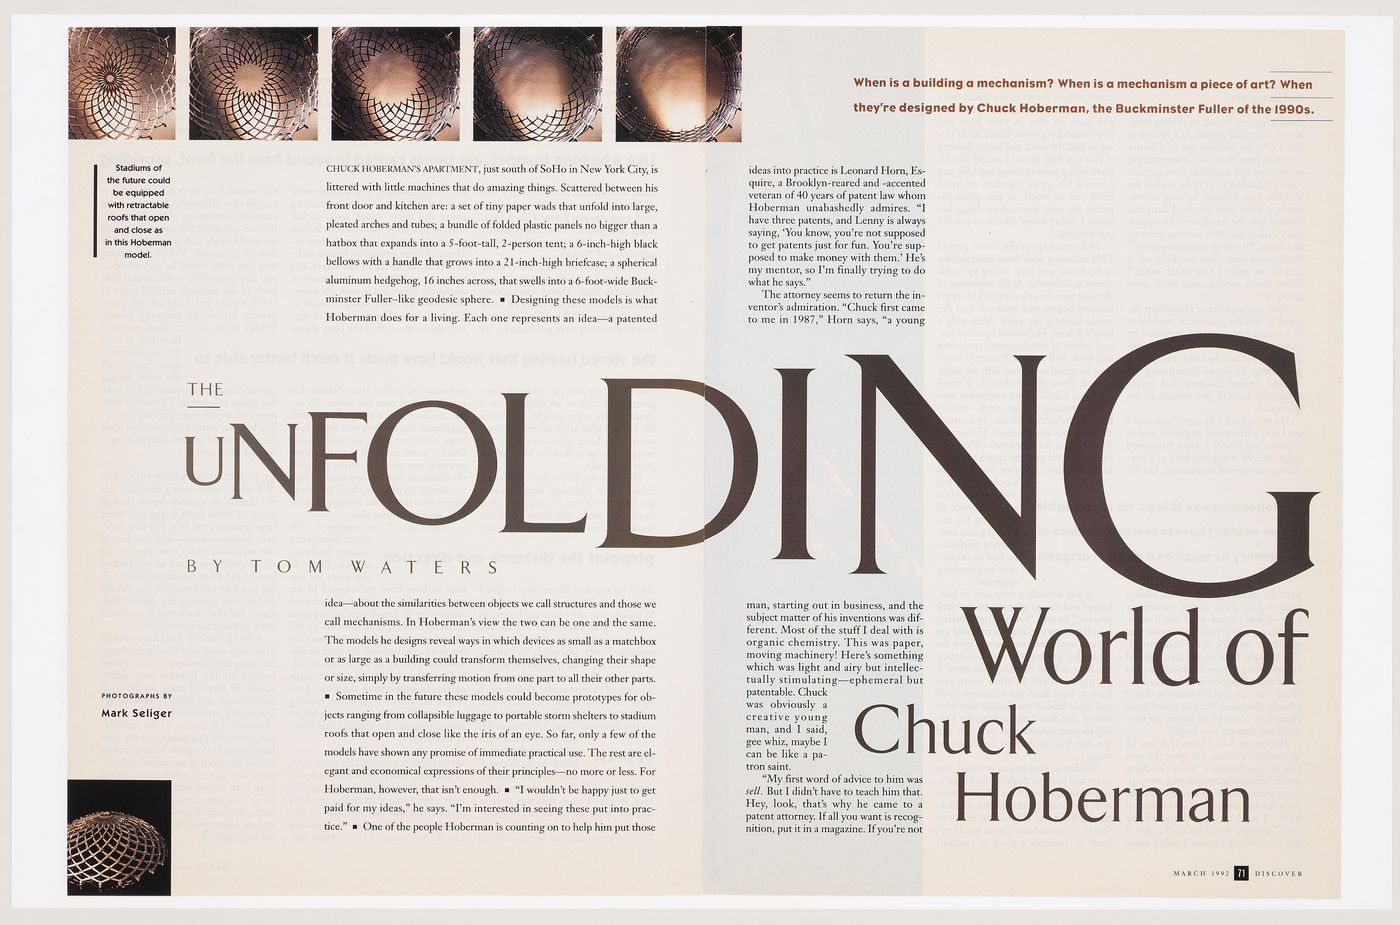 The unfolding world of Chuck Hoberman